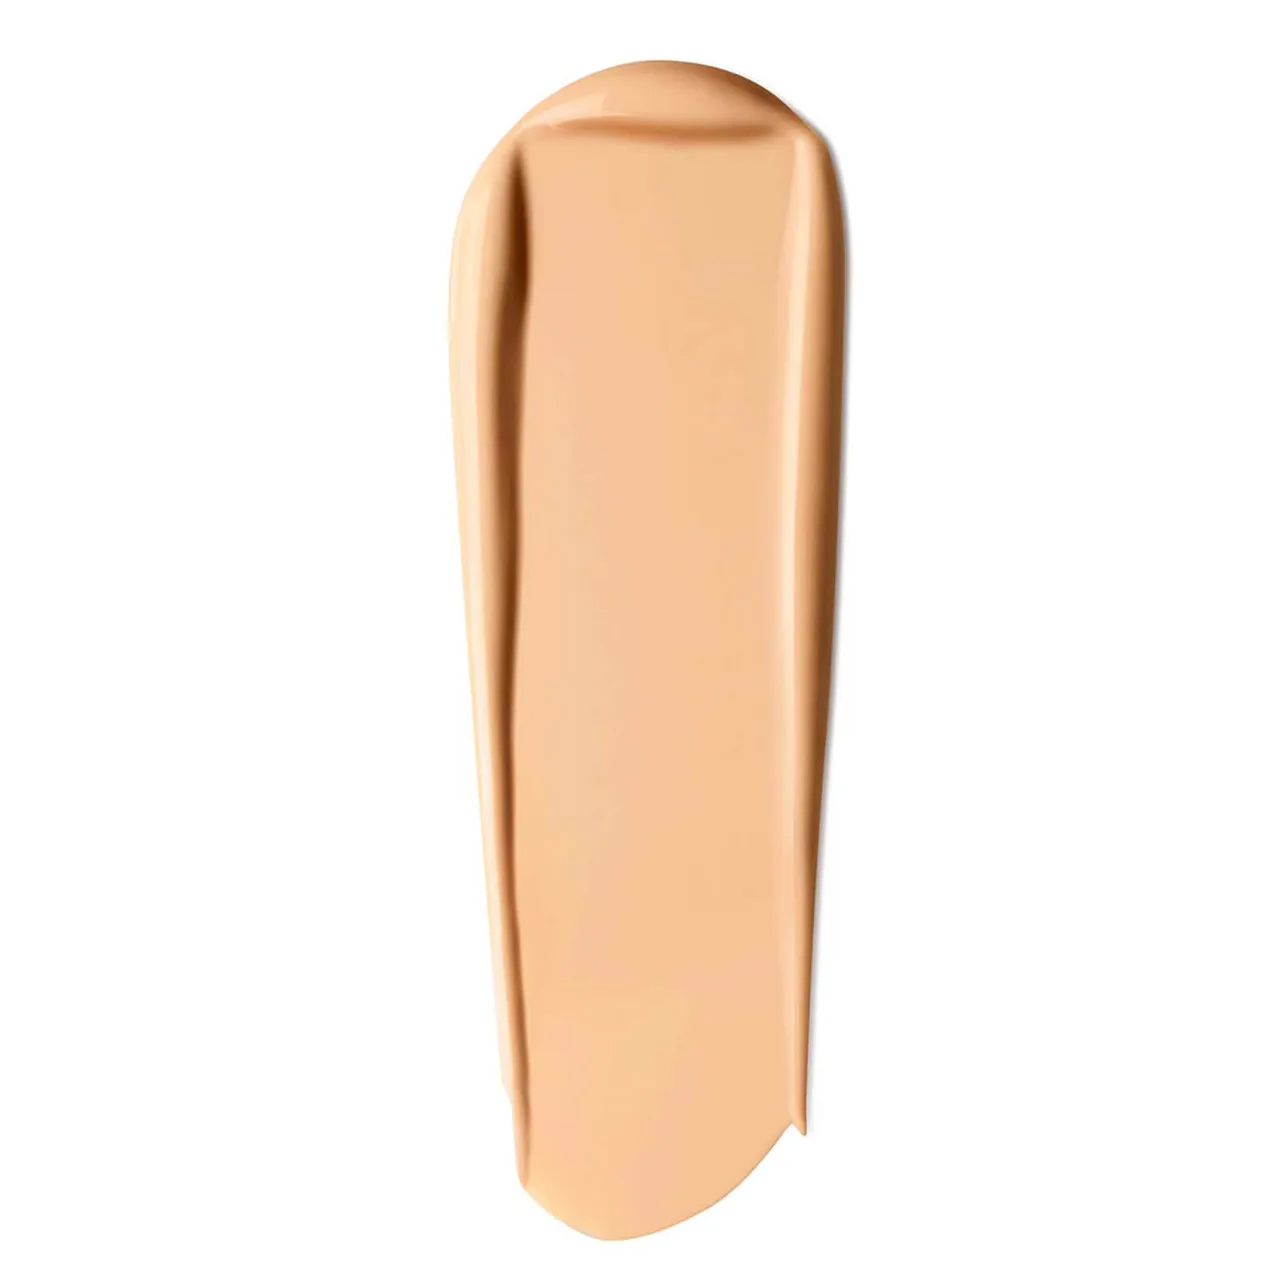 Guerlain Parure Gold Skin 24H No-Transfer High Perfection Foundation 35ml (Various Shades) - 3W Warm / Doré